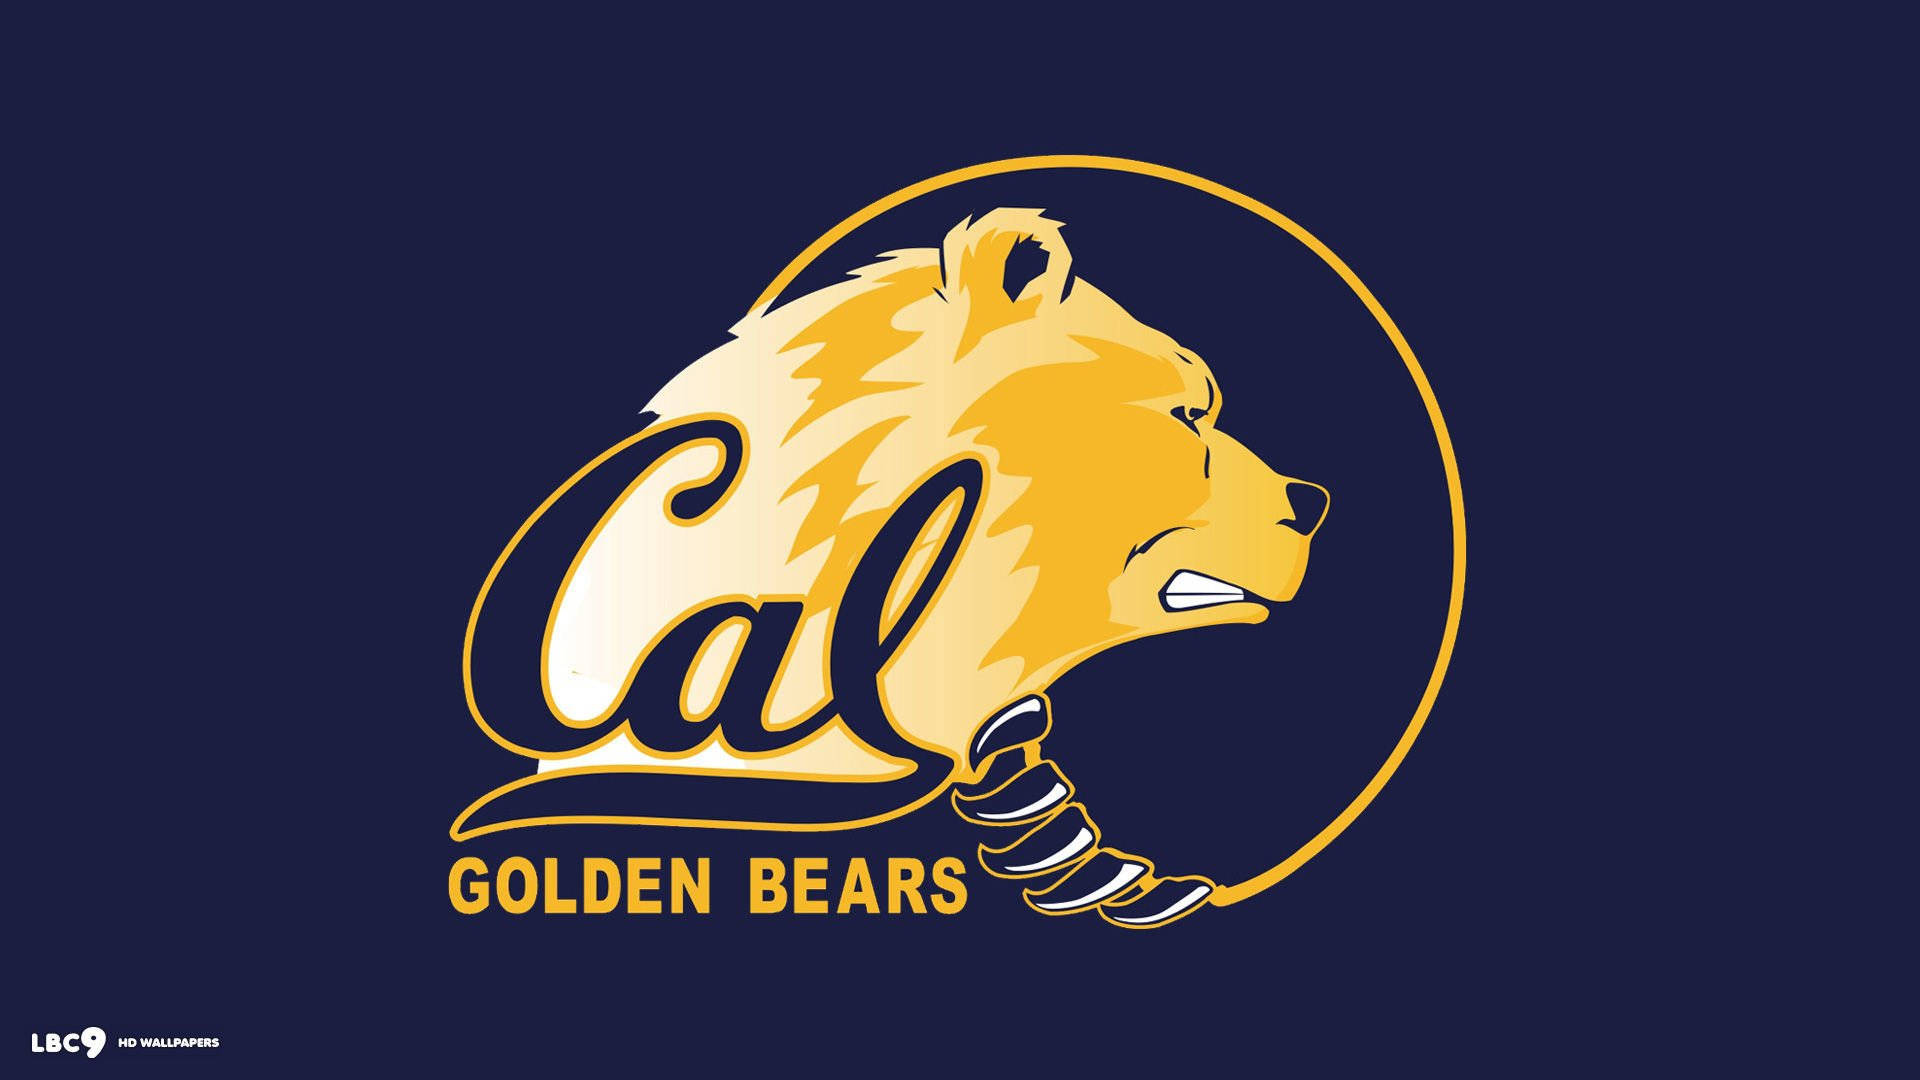 Ucb Golden Bears Flag Wallpaper